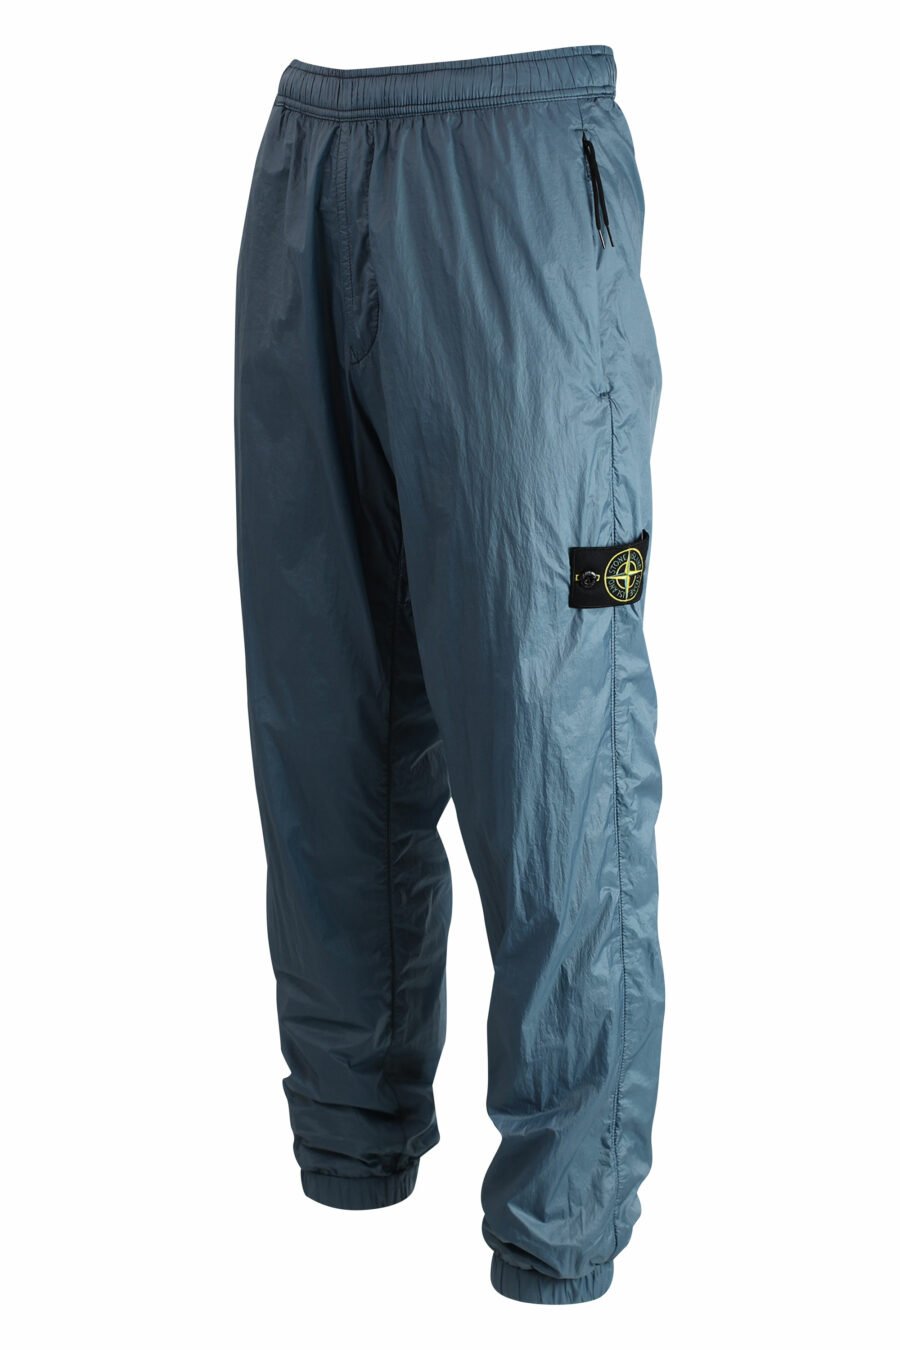 Pantalon bleu-gris avec patch - 8052572559723 2